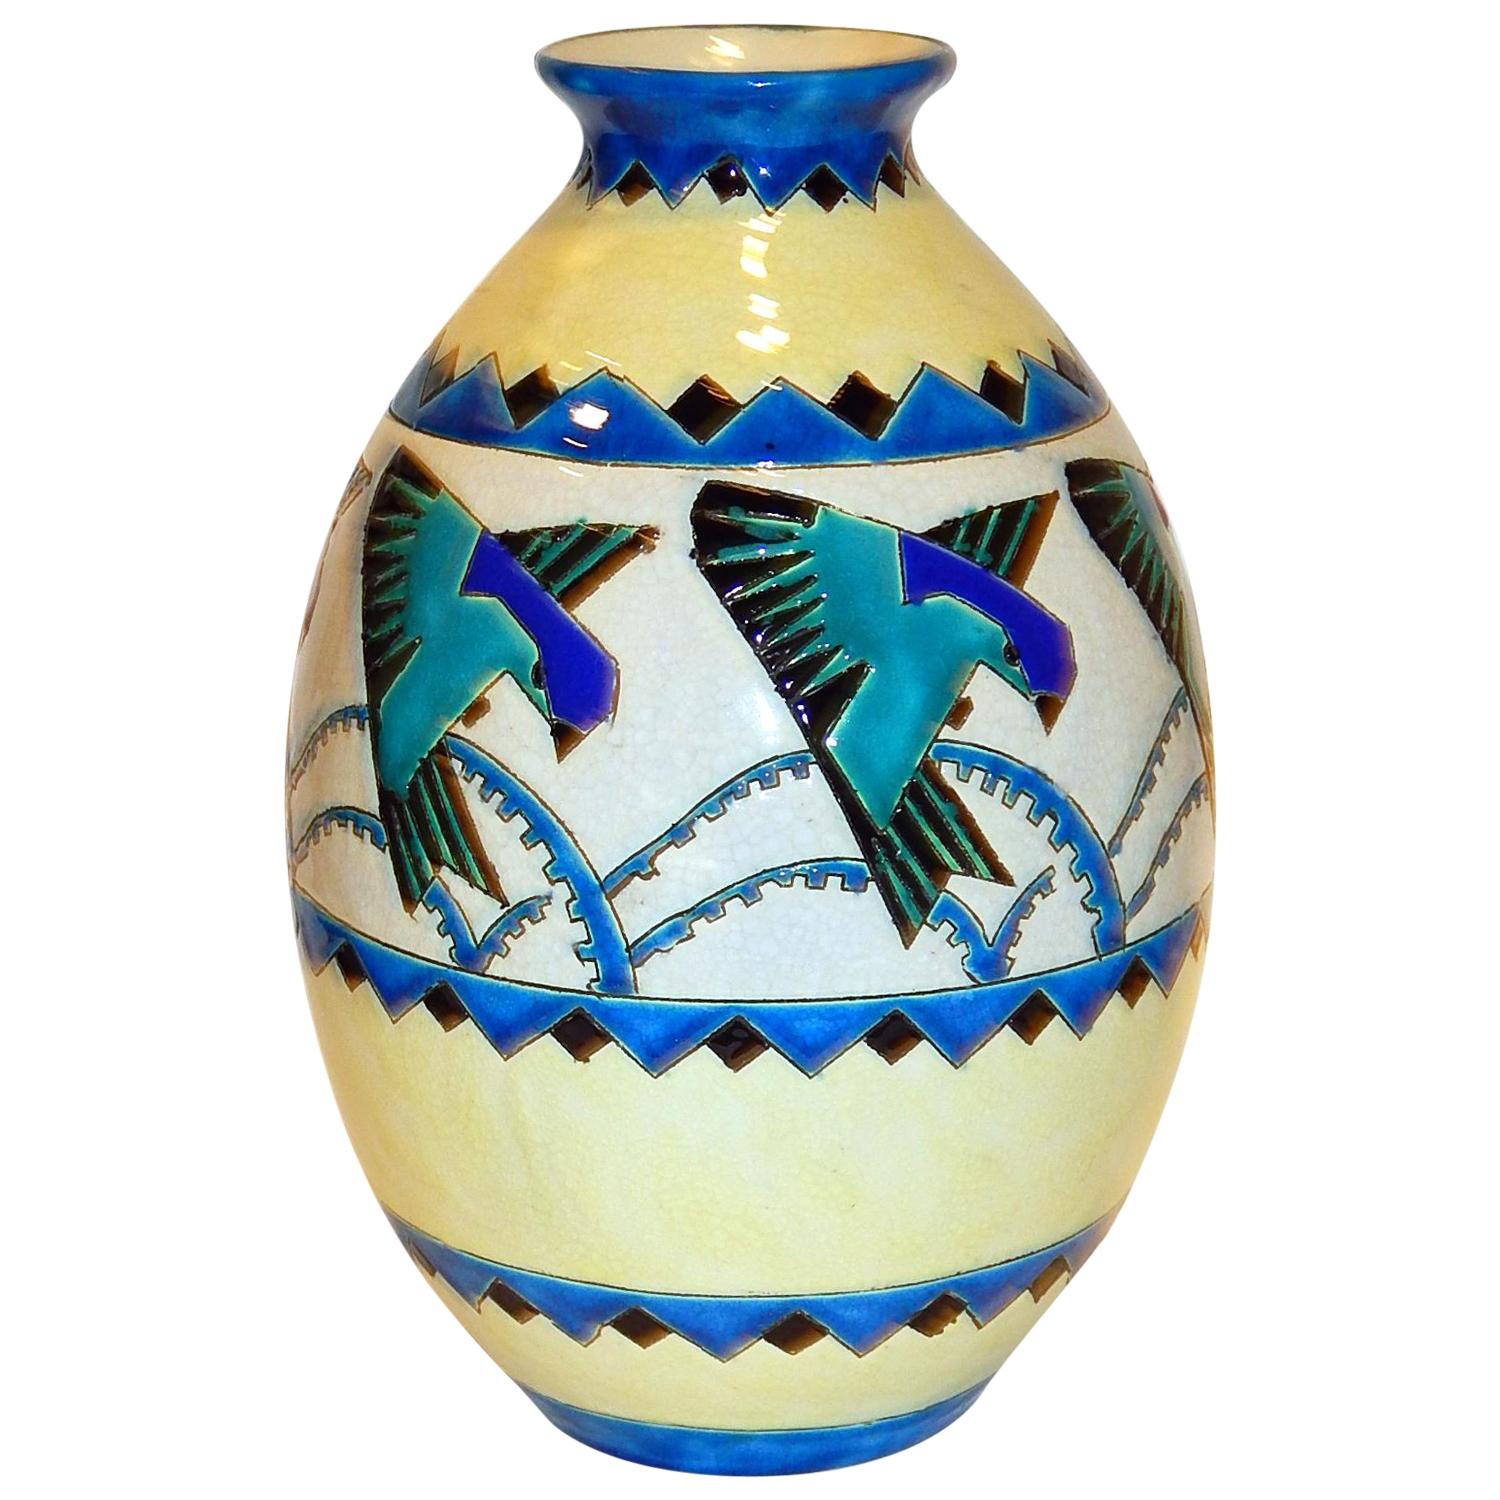 Boch Freres Keramis Belgian Deco Ceramic Vase circa 1920s-1930s, Bird Motif